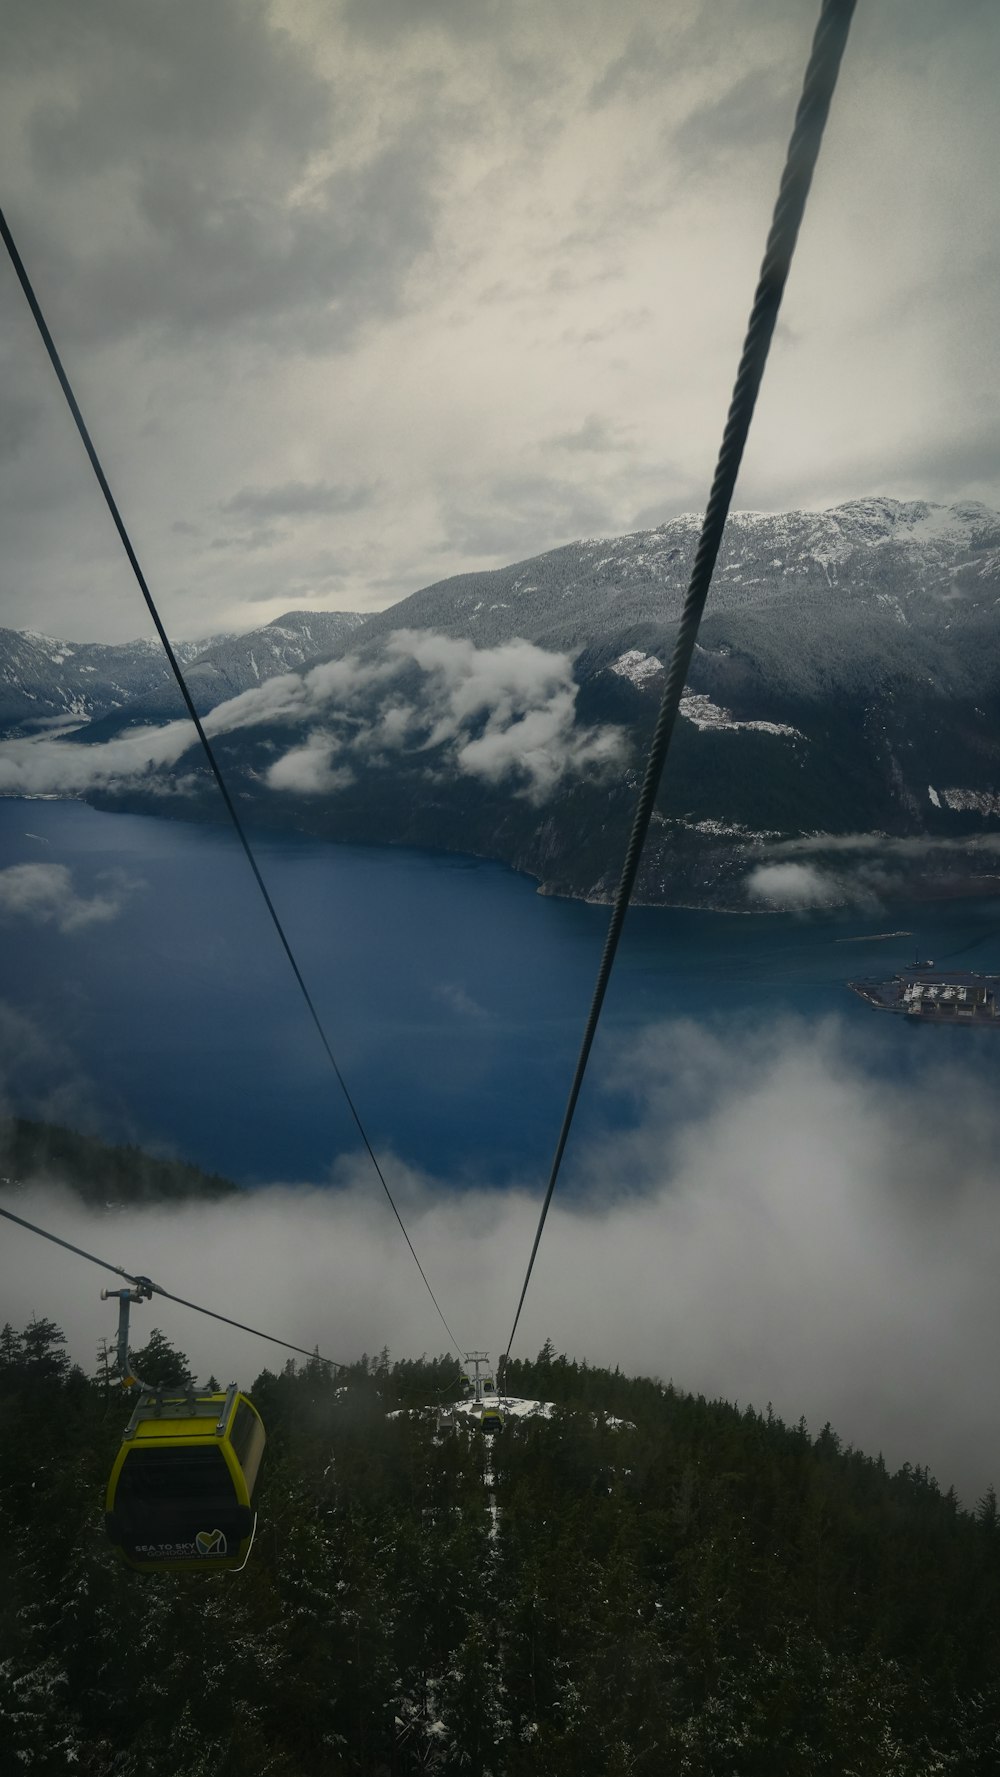 a ski lift with a view of a lake